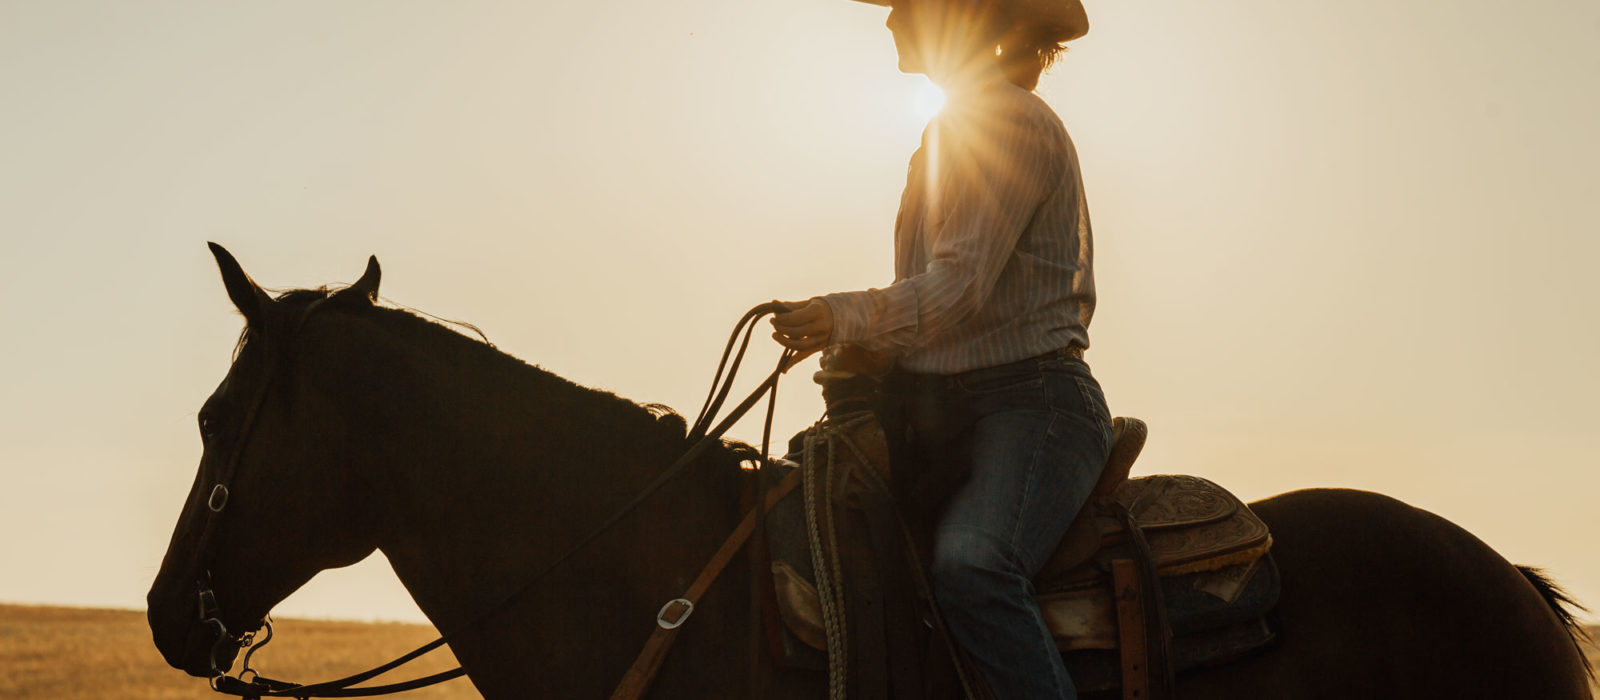 Woman rancher on horseback